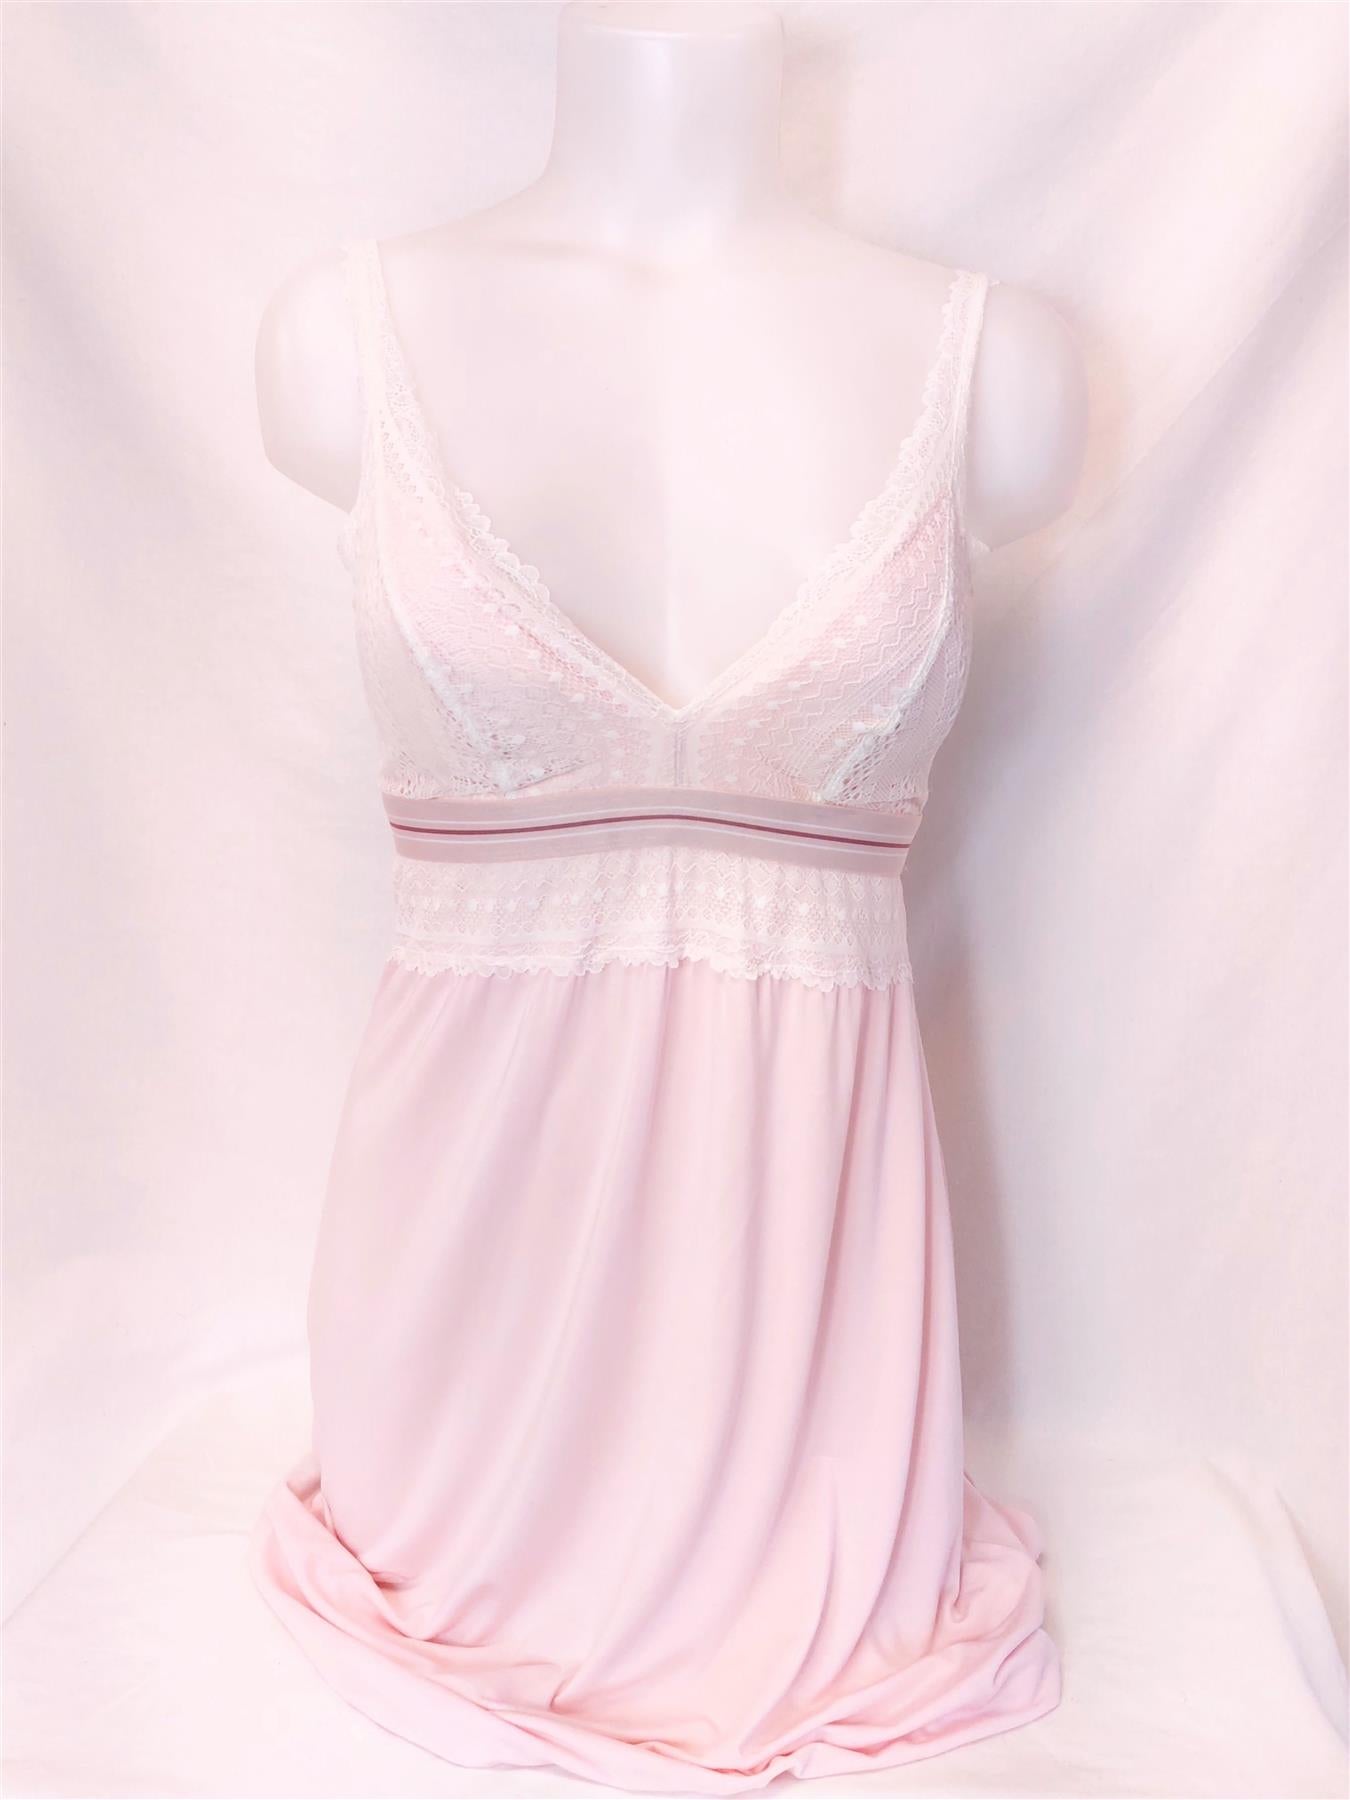 Women's Supersoft Nightdress Slip Pyjama Sleepwear Lace Trim Nightie Pale Pink